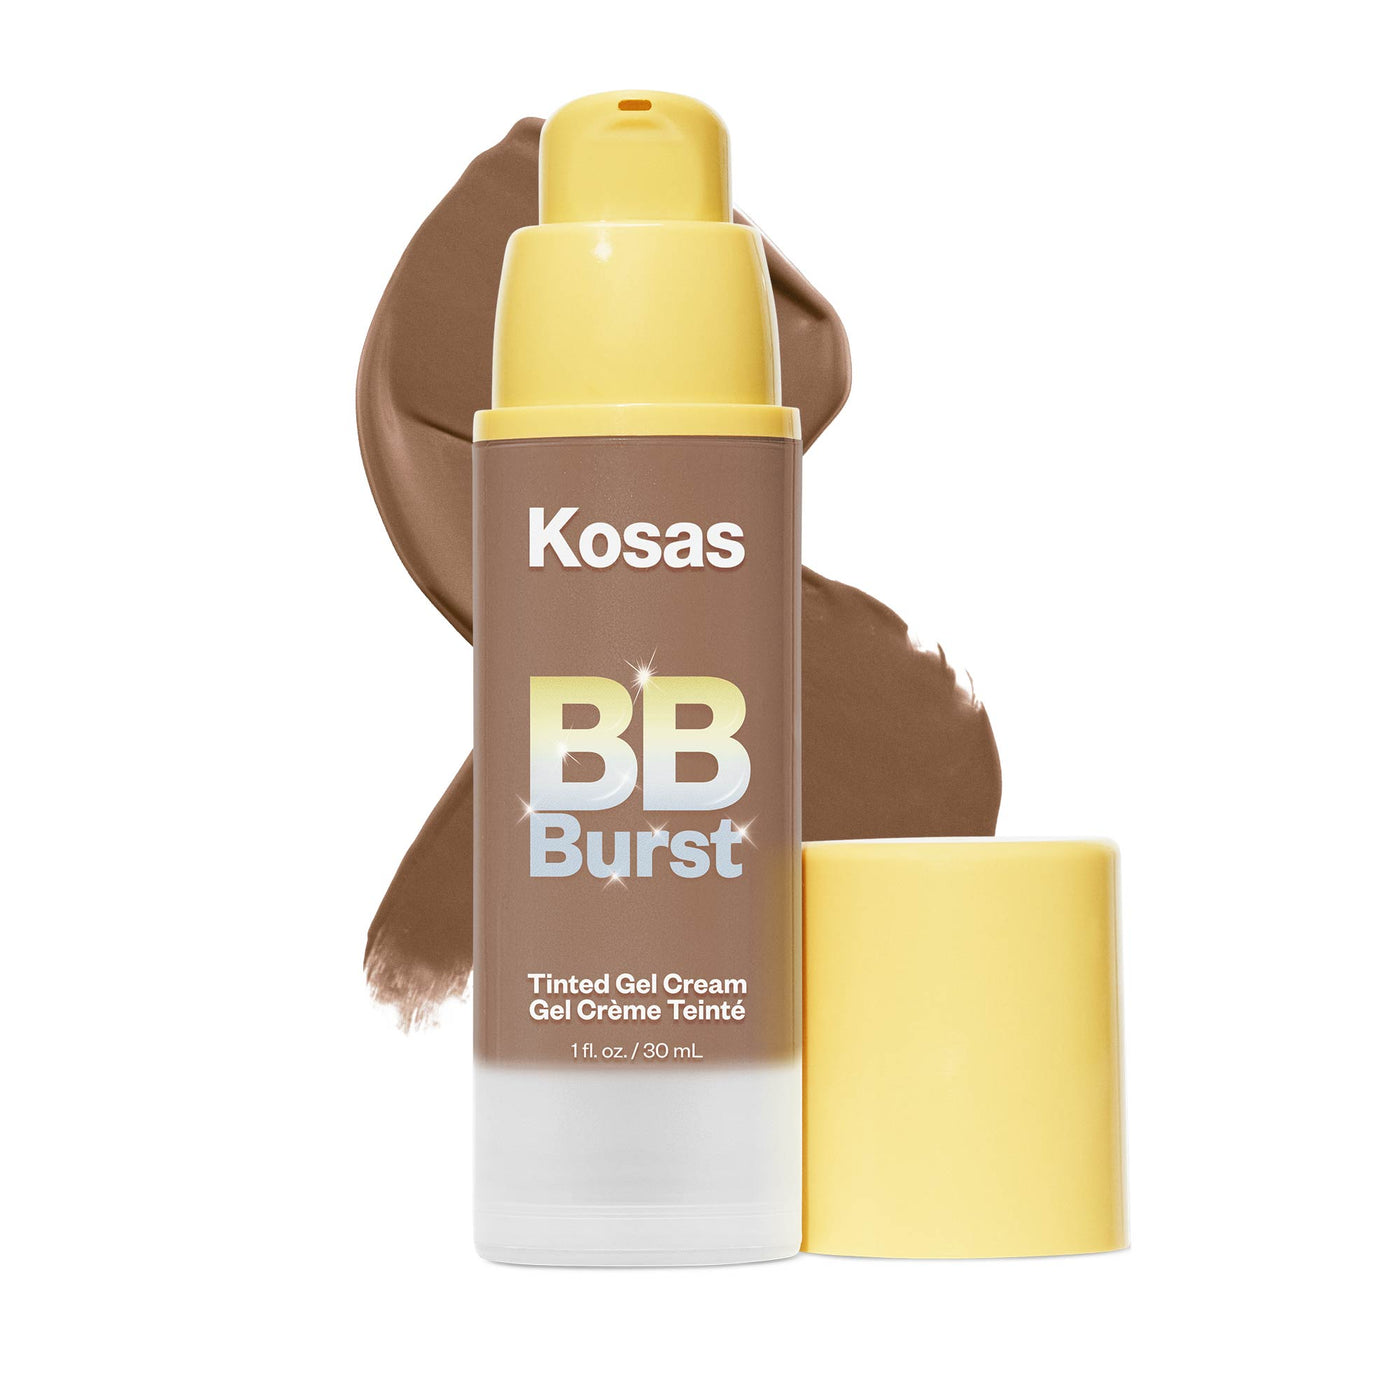 Kosas BB Burst Tinted Gel Cream 40